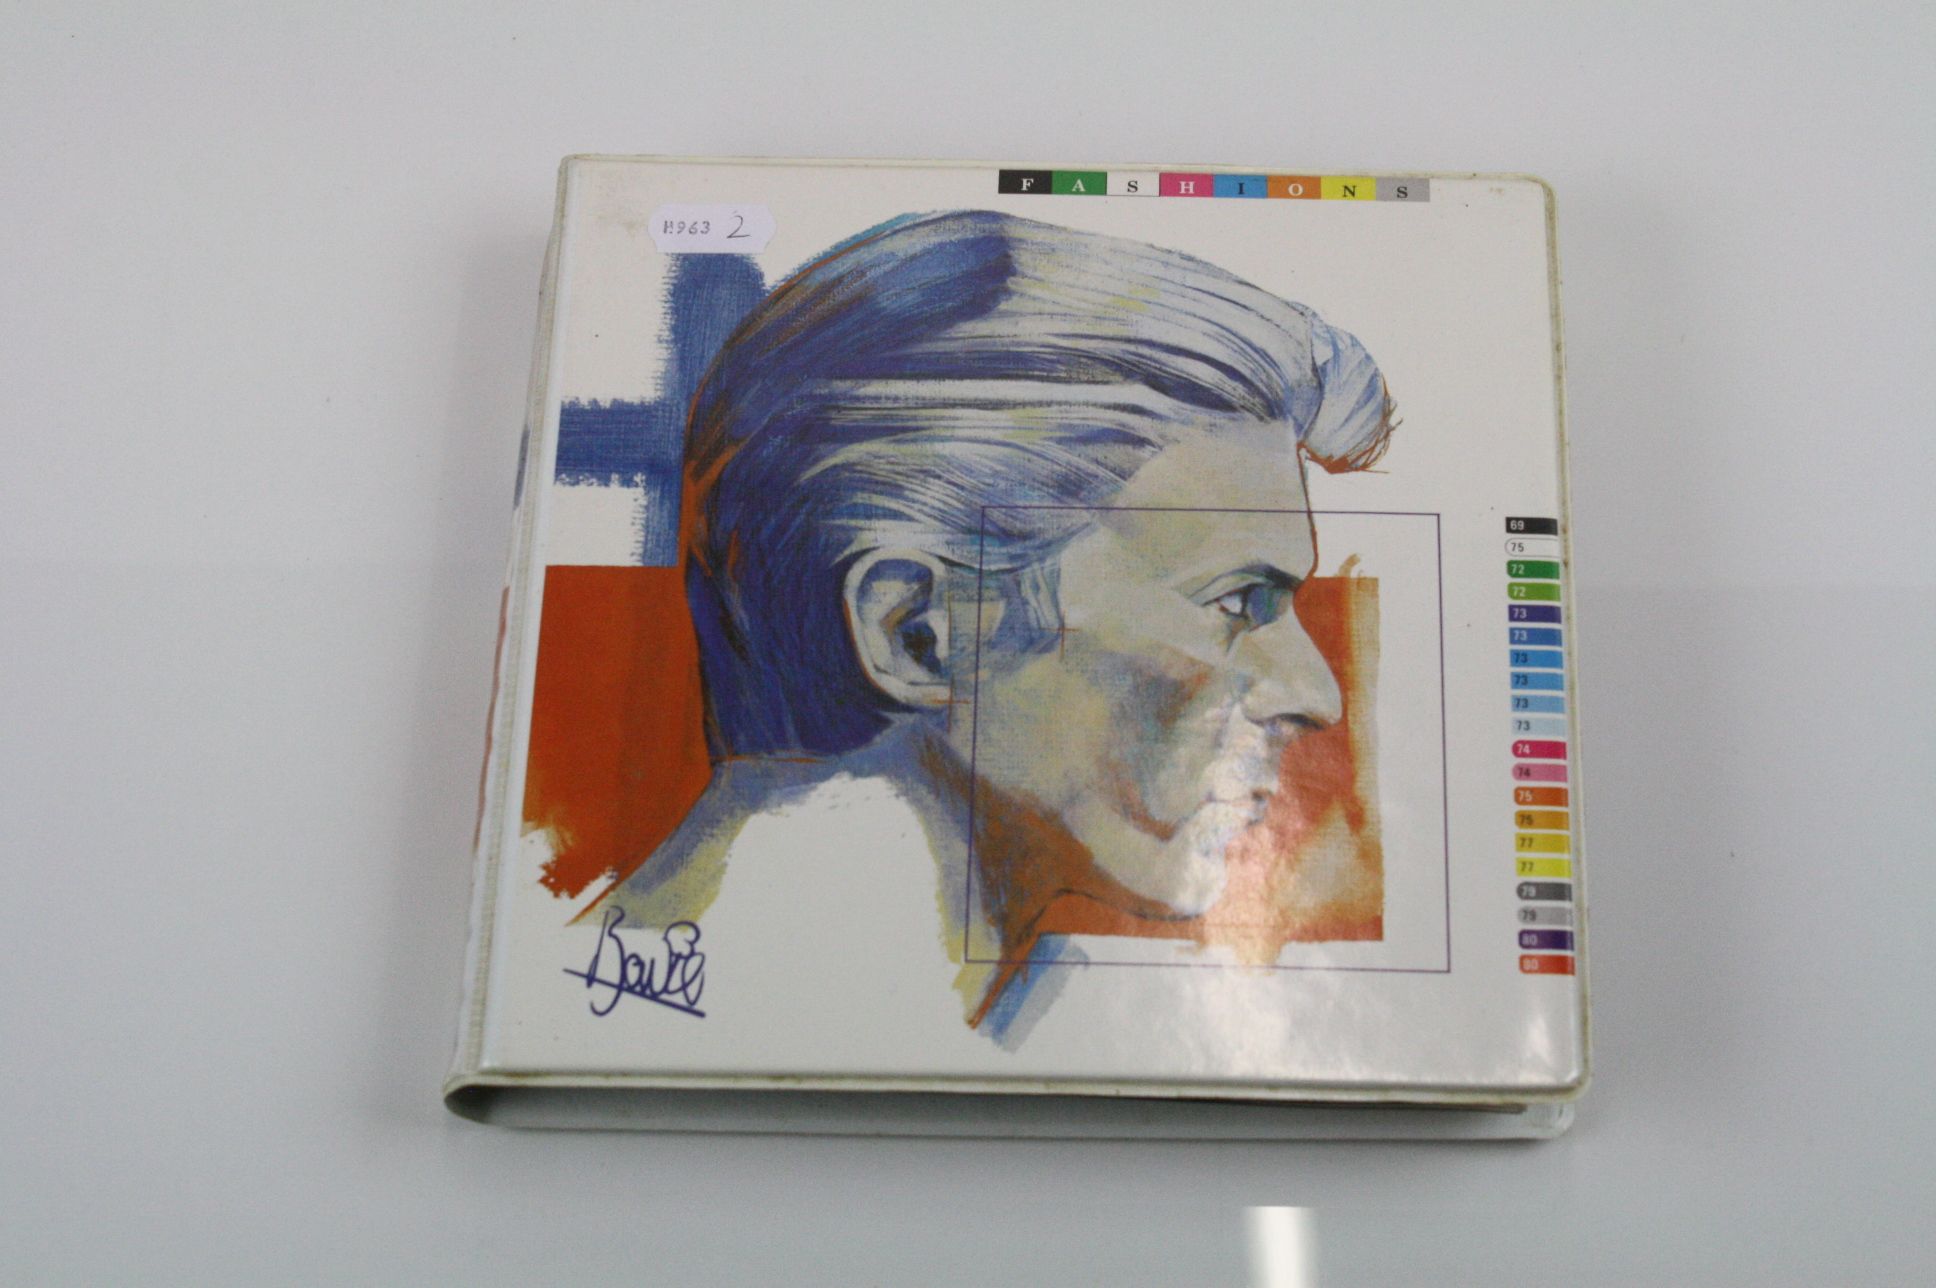 Vinyl - David Bowie Fashions BOW100 set of 10 x 7" picture discs, vg++